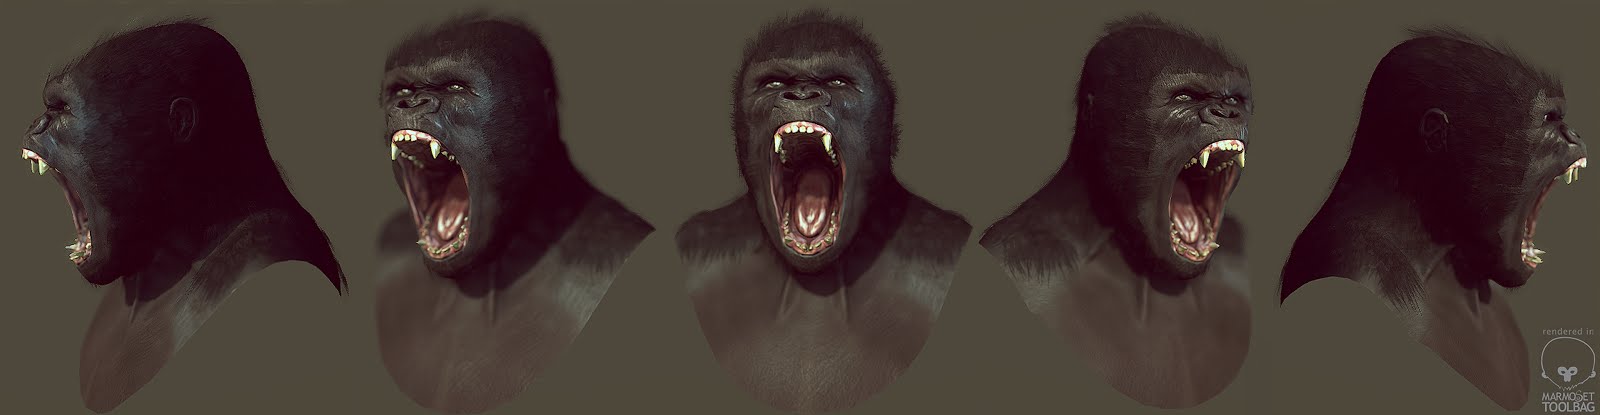 gorilla_turn_images.jpg